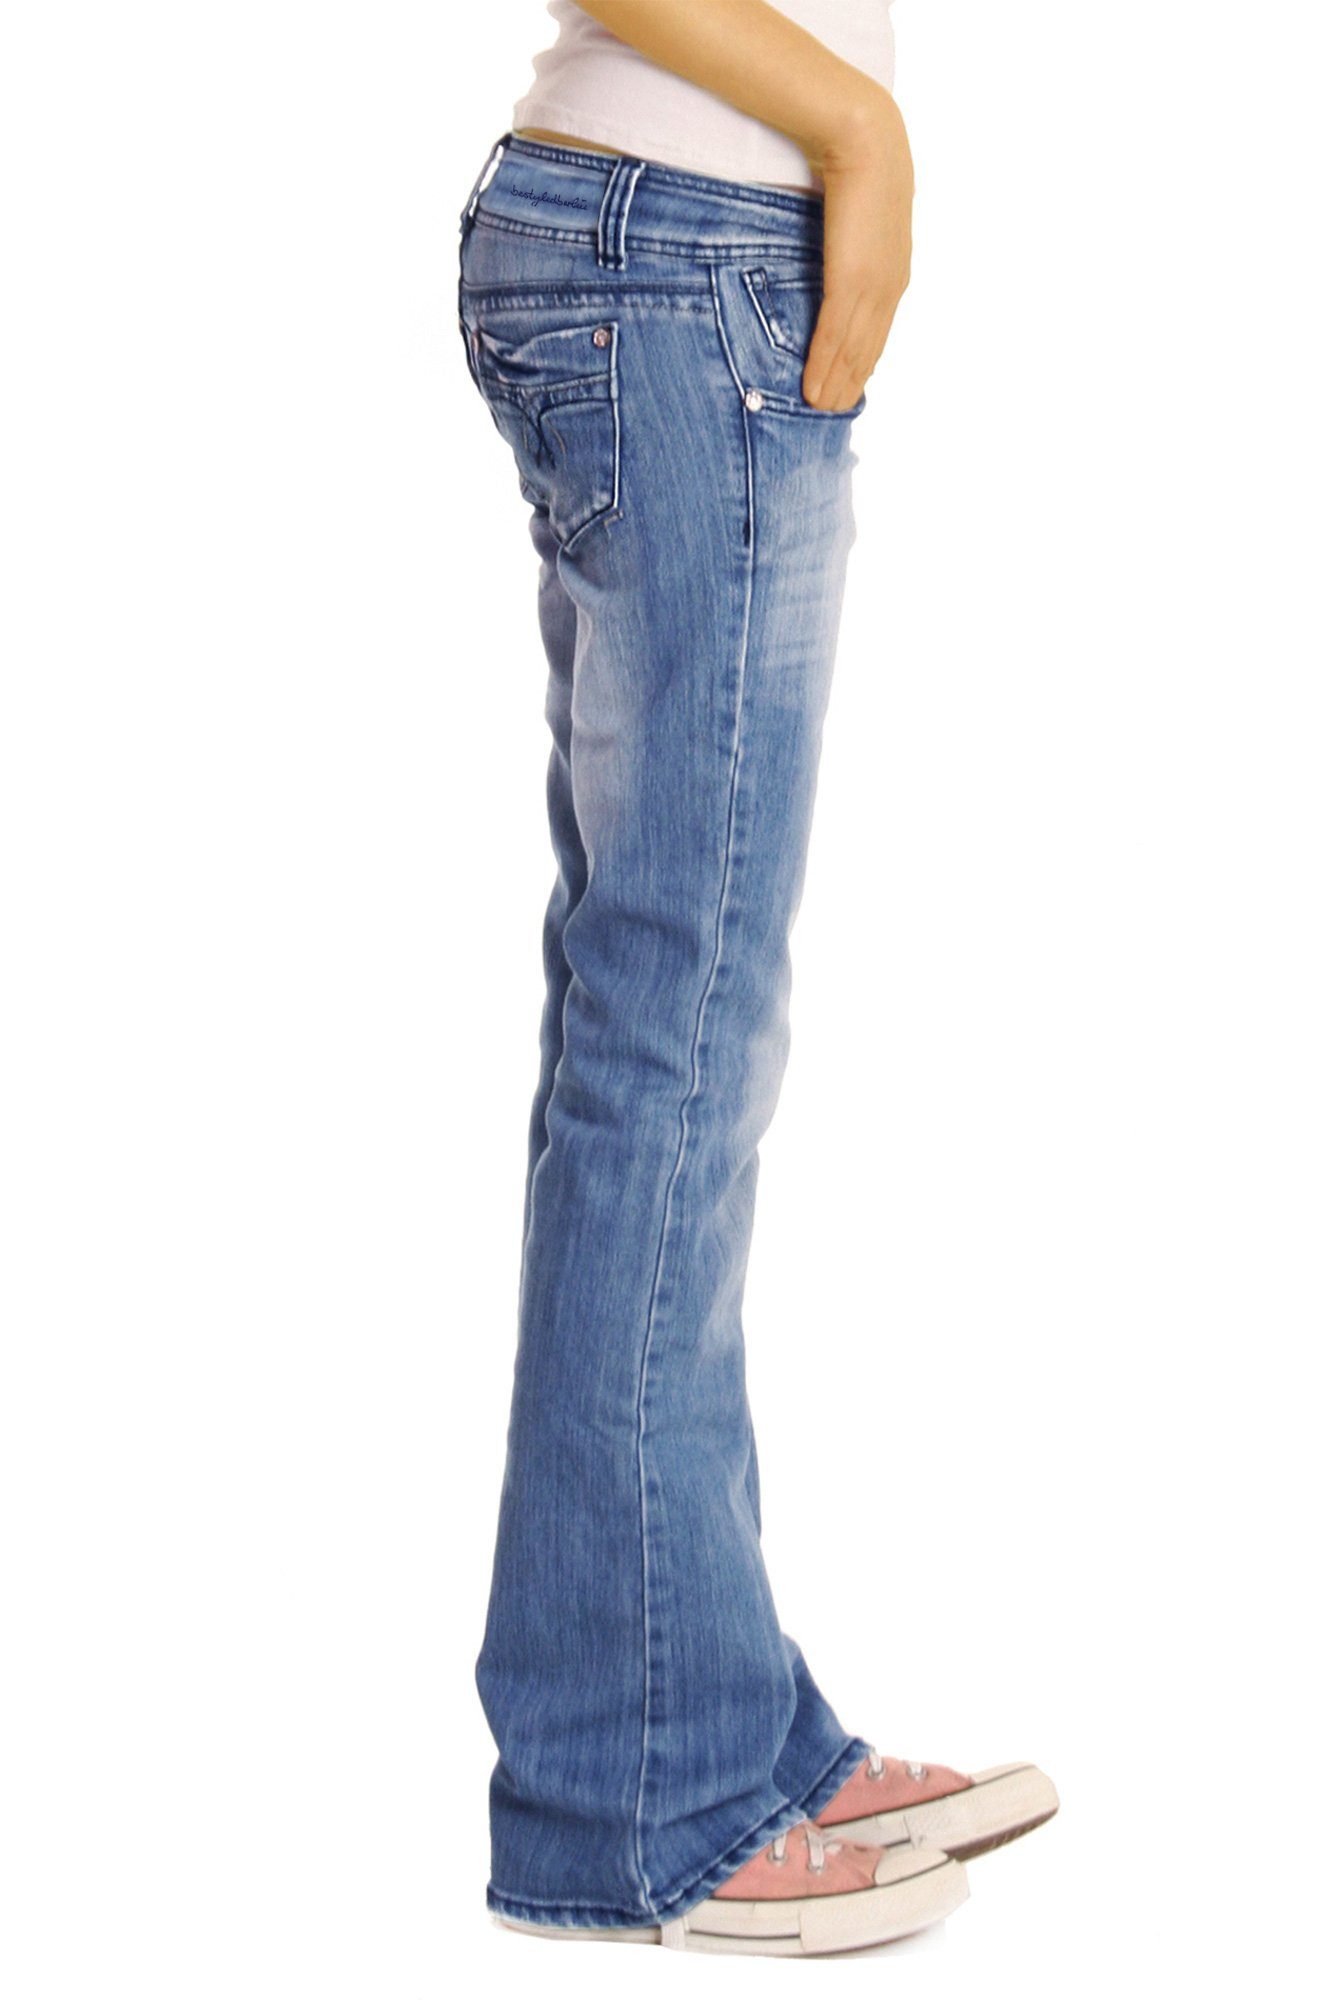 Hosen 5-pocket lockere be Damenjeans, waist Bootcut-Jeans j06x niedrig geschnittene low styled